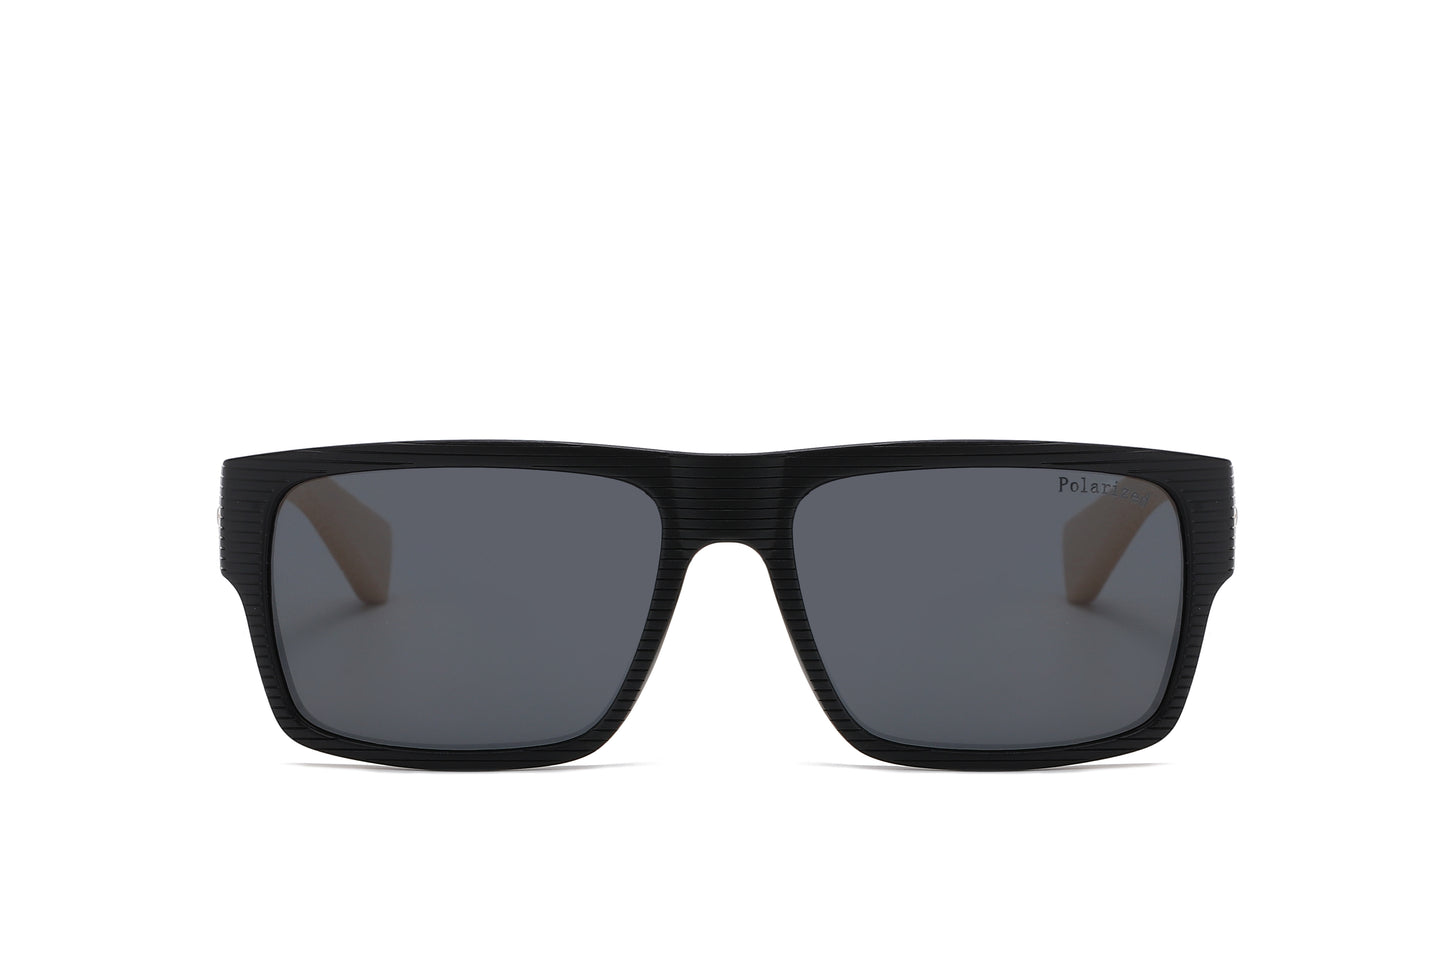 PL 7875 - Rectangular Rigid Frame Flat Top Bamboo Polarized Sunglasses